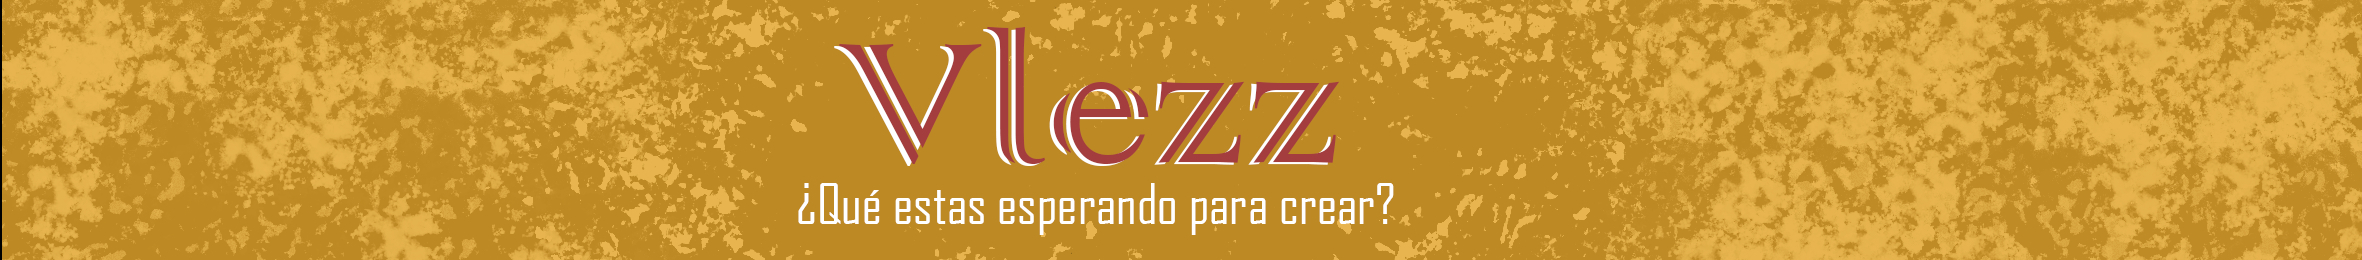 Daniel Velez's profile banner